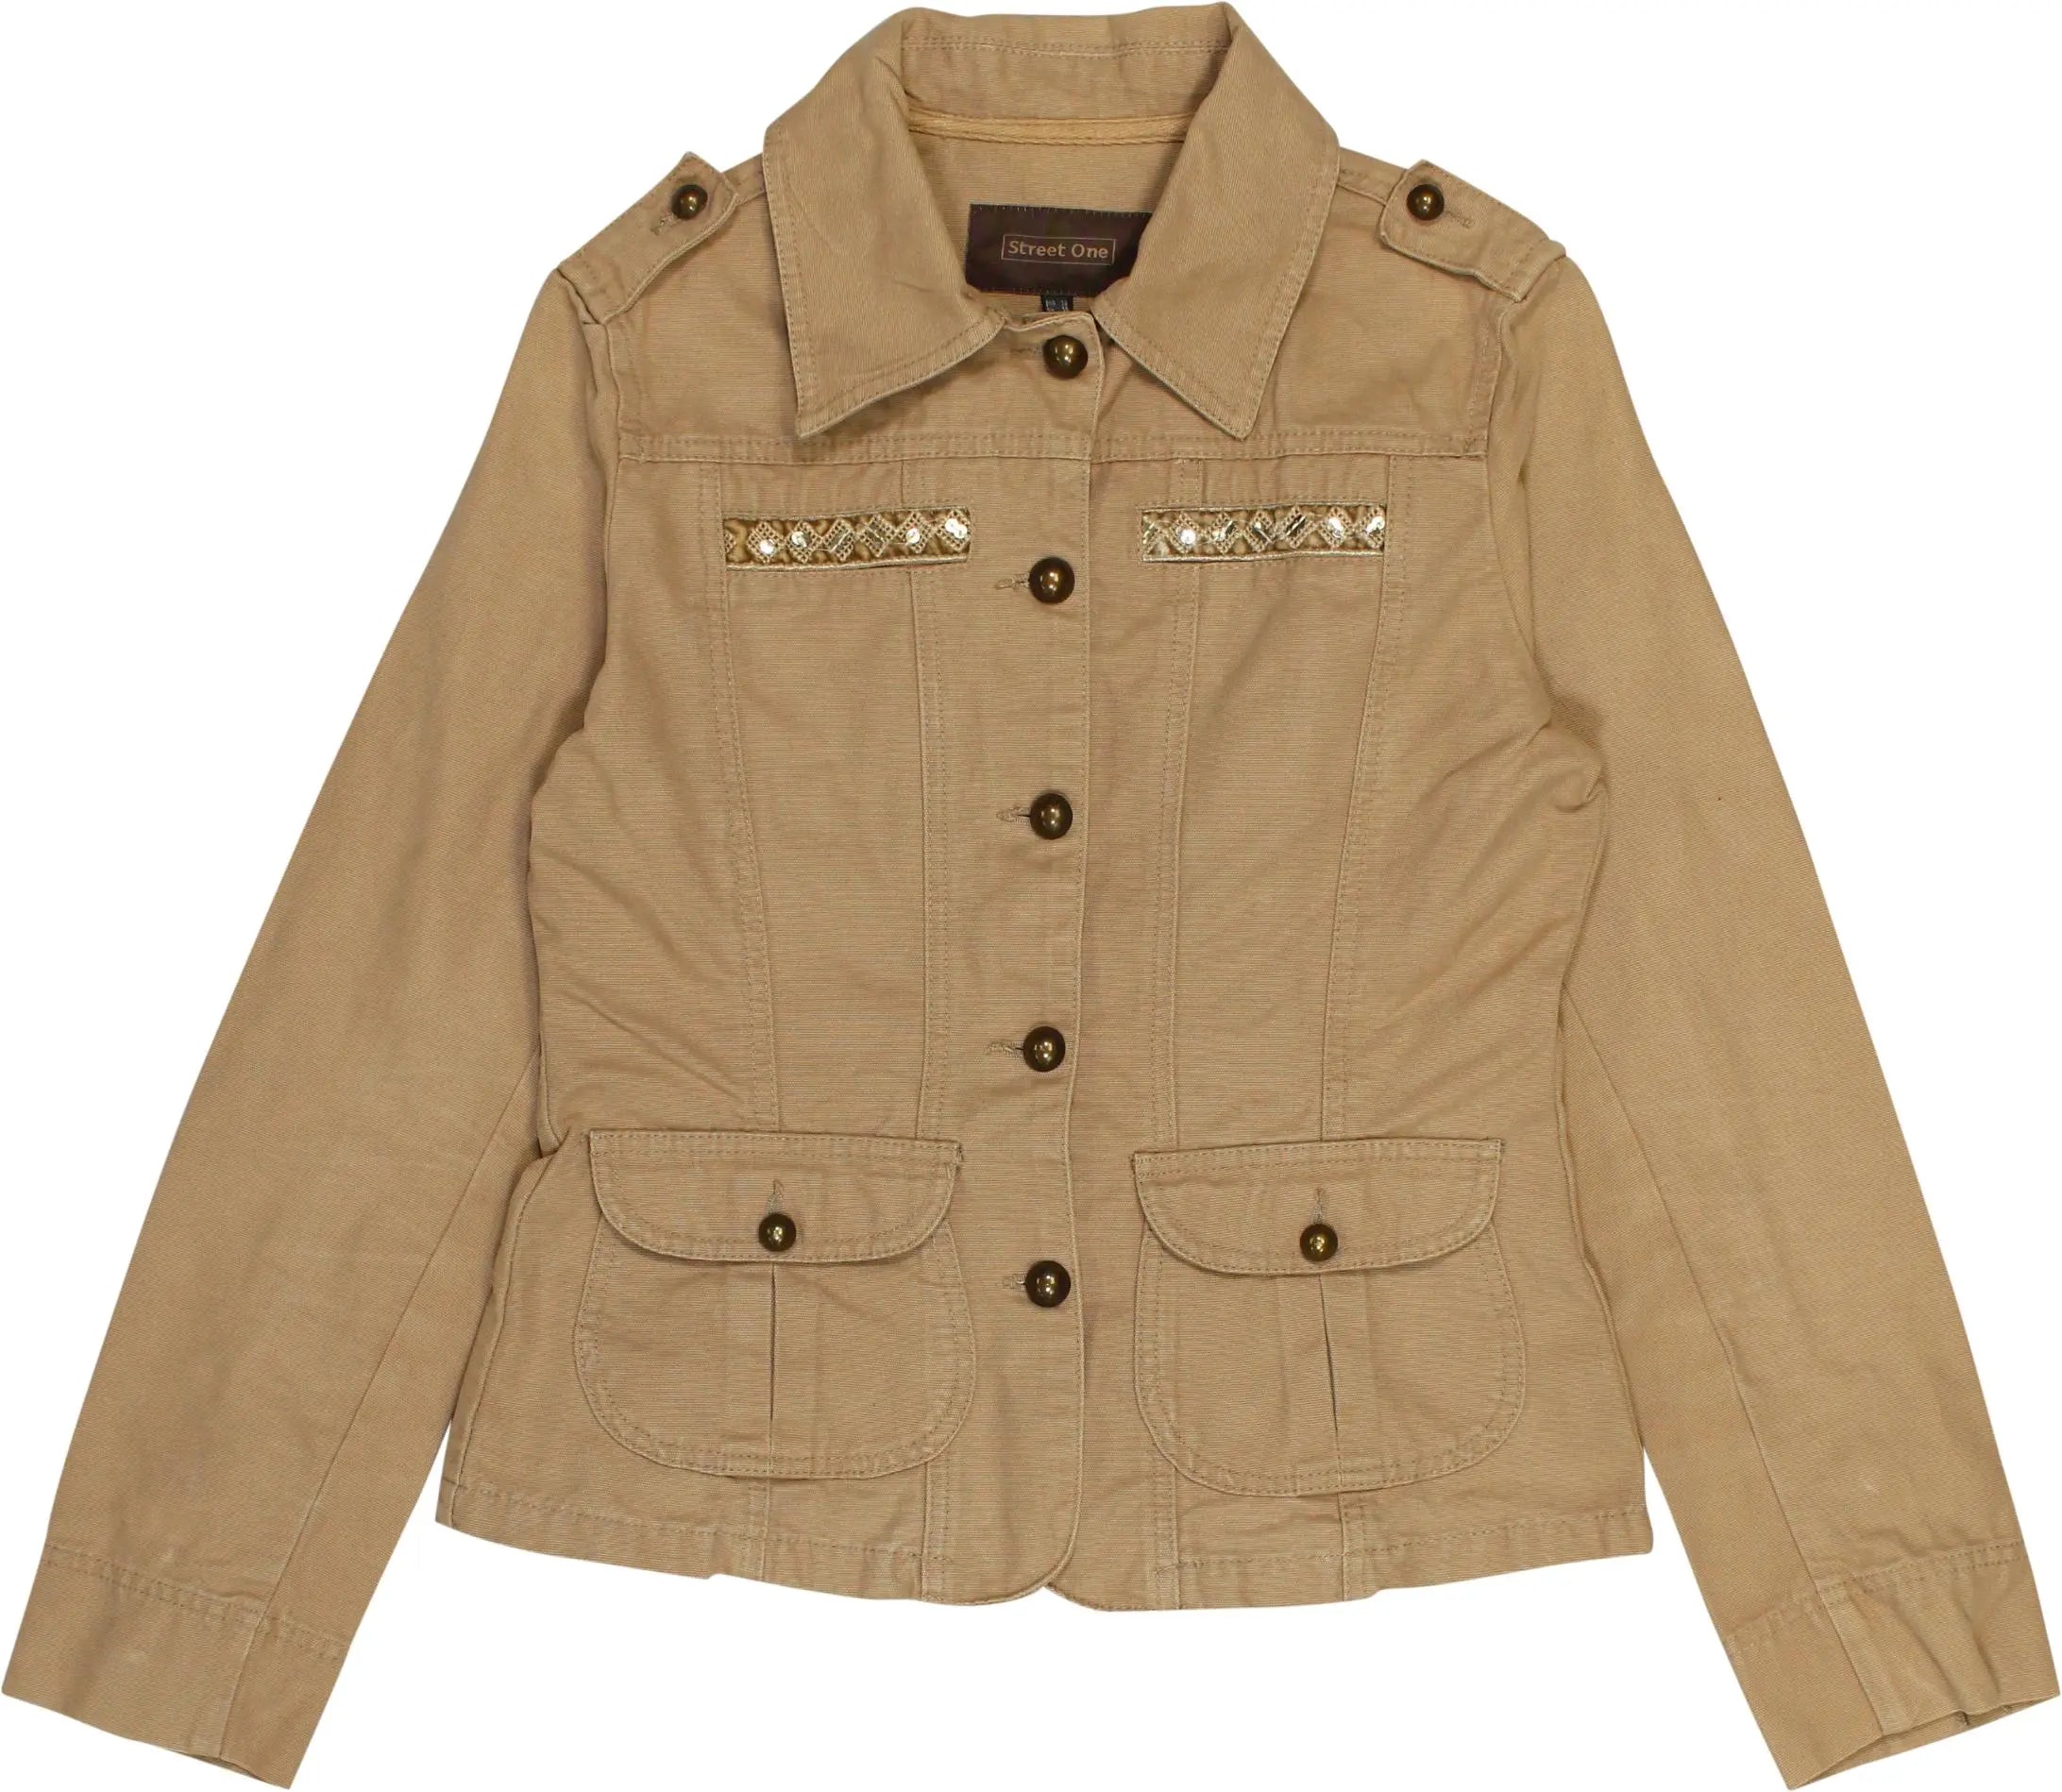 Street One - Denim Jacket- ThriftTale.com - Vintage and second handclothing